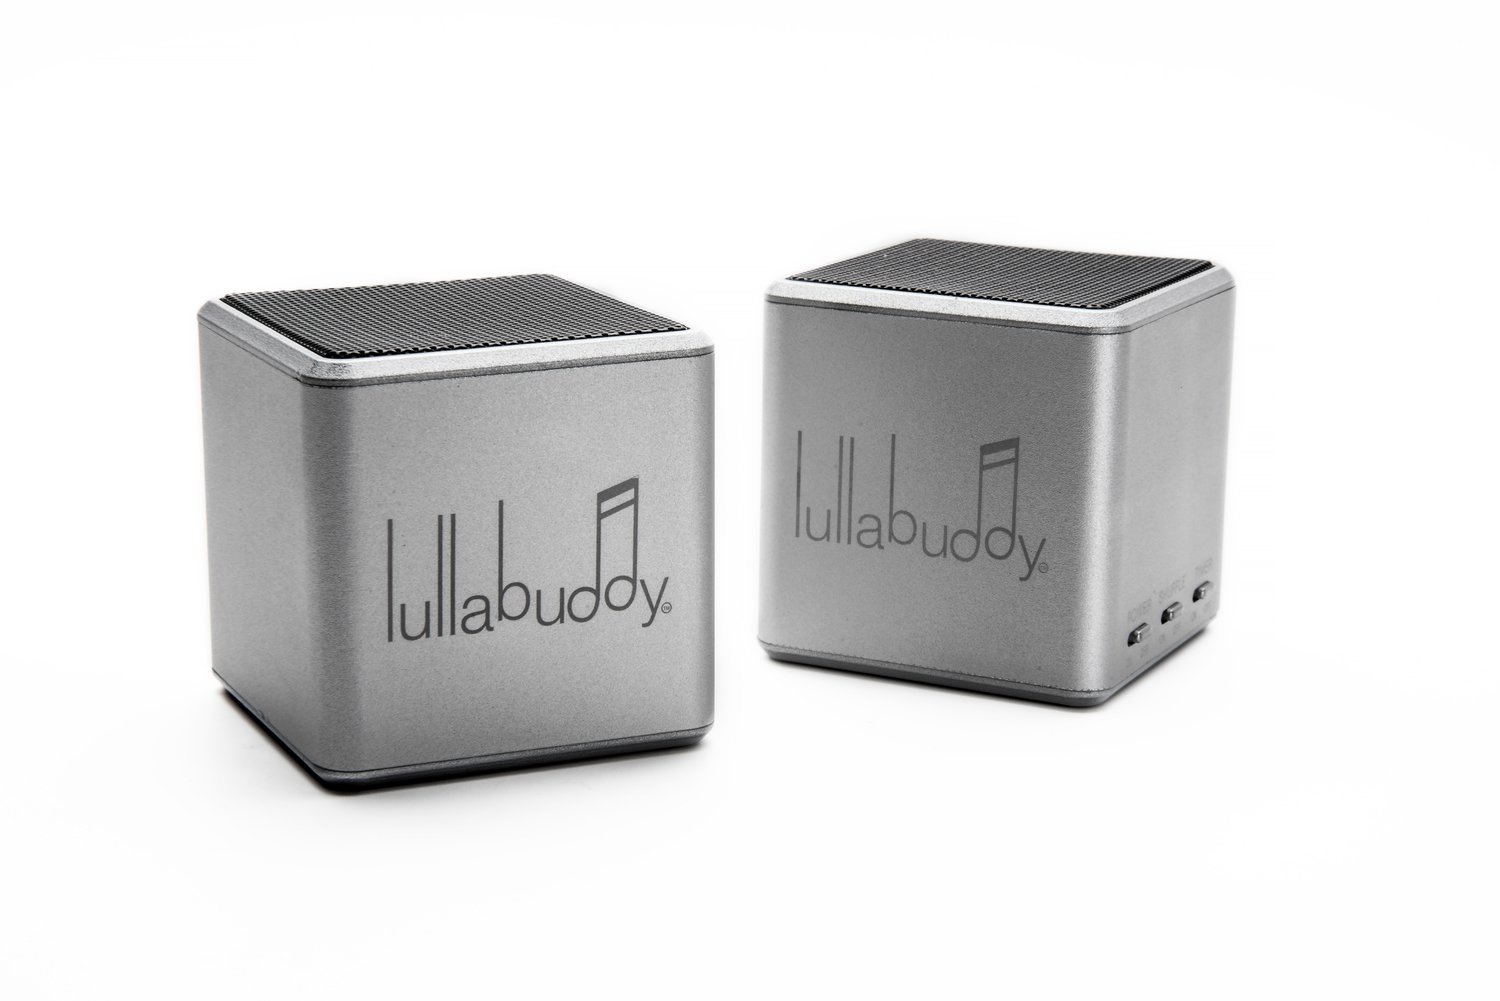 Lullabuddy Bundle - Save $10.00 on 2 Pack